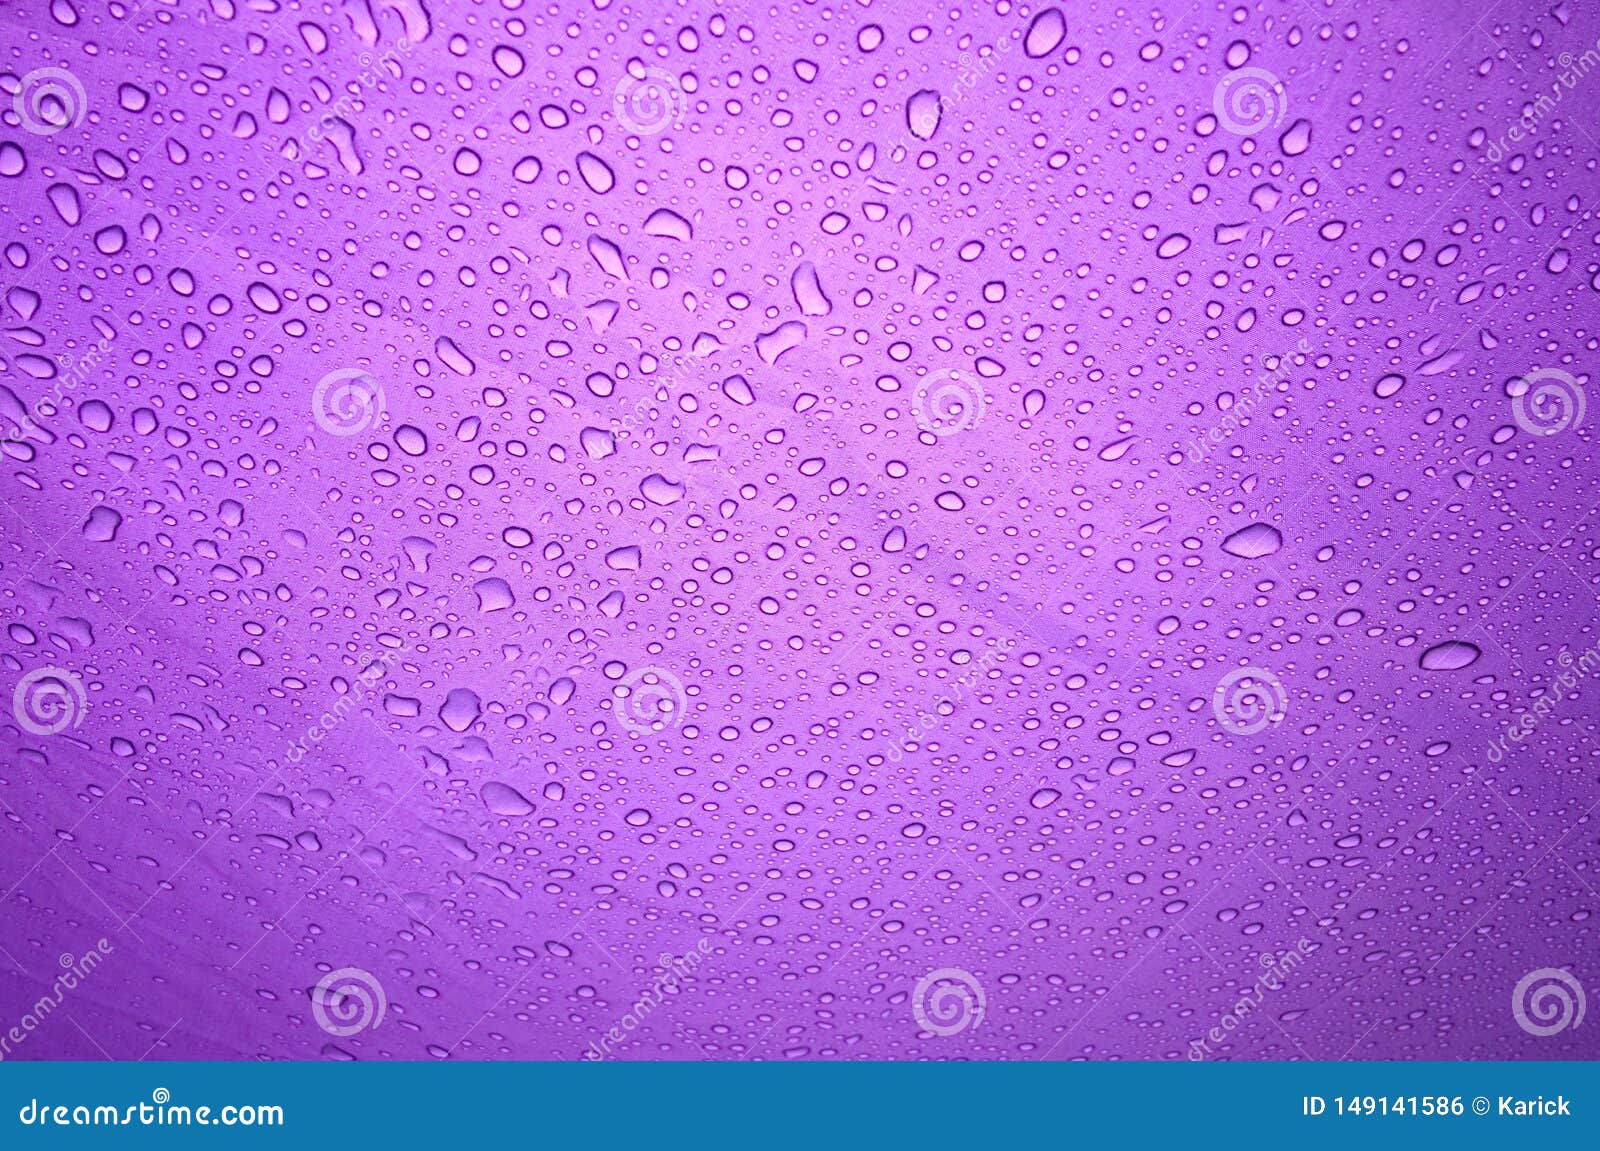 purple rain  Other  Abstract Background Wallpapers on Desktop Nexus  Image 39352